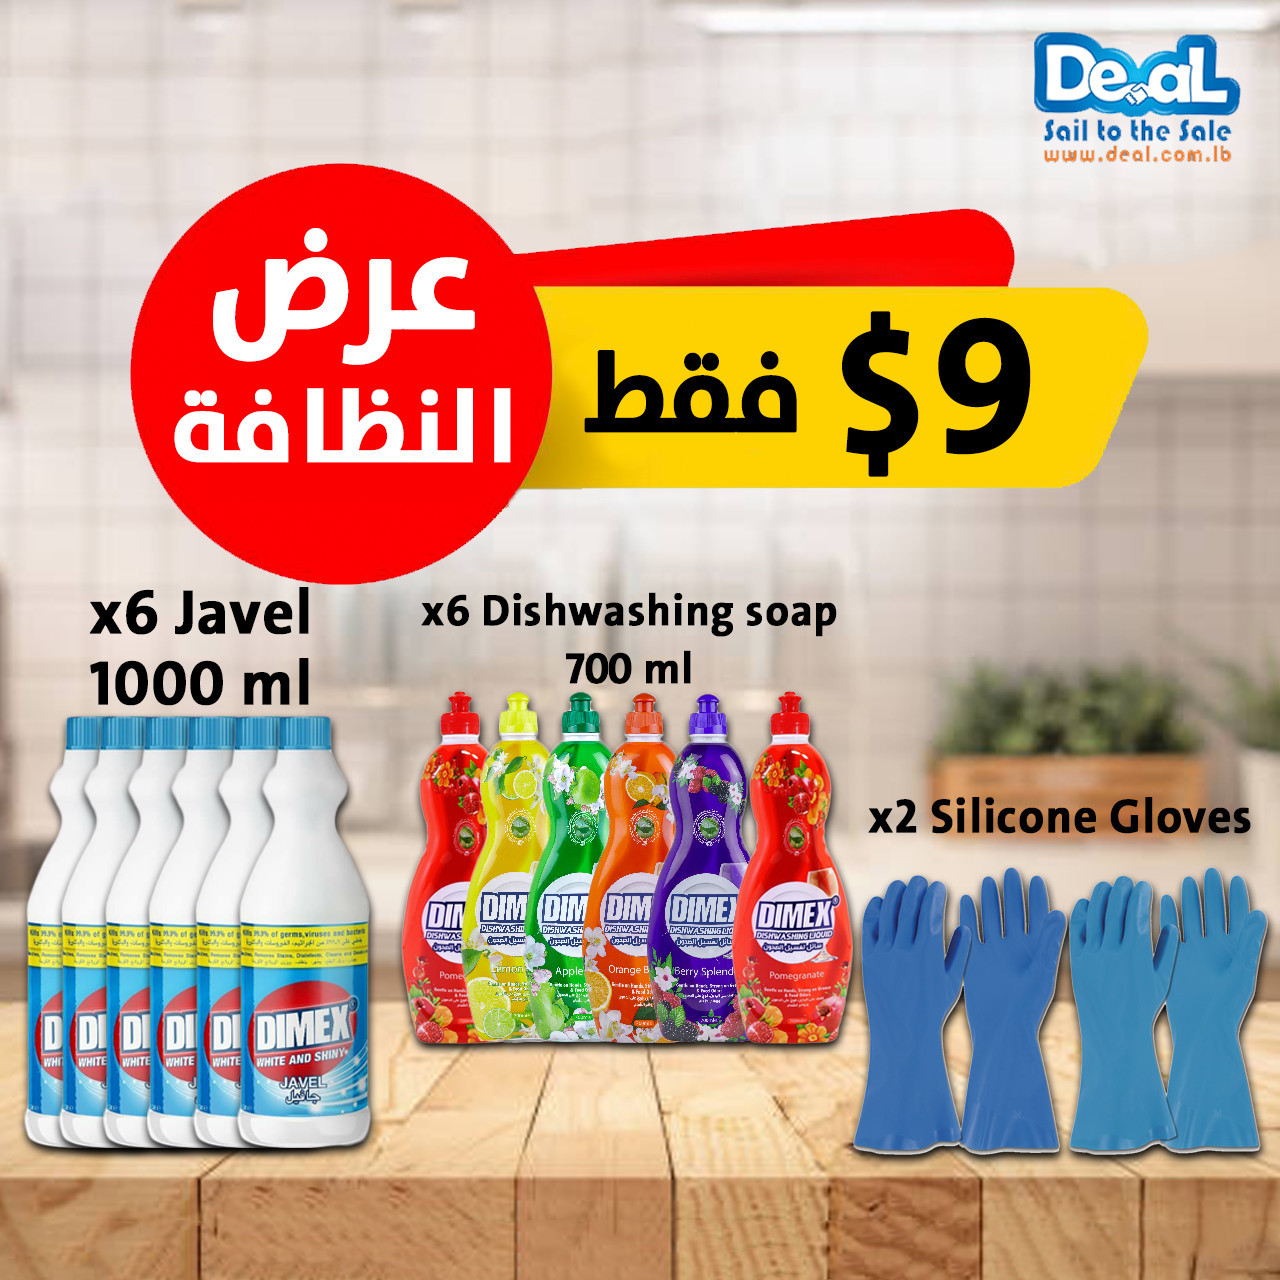 Cleaning+Offer+6pcs+dimex+javel+1000ml%2B6pcs+dimex+dishwashing+700ml%2B2pair+silicone+gloves